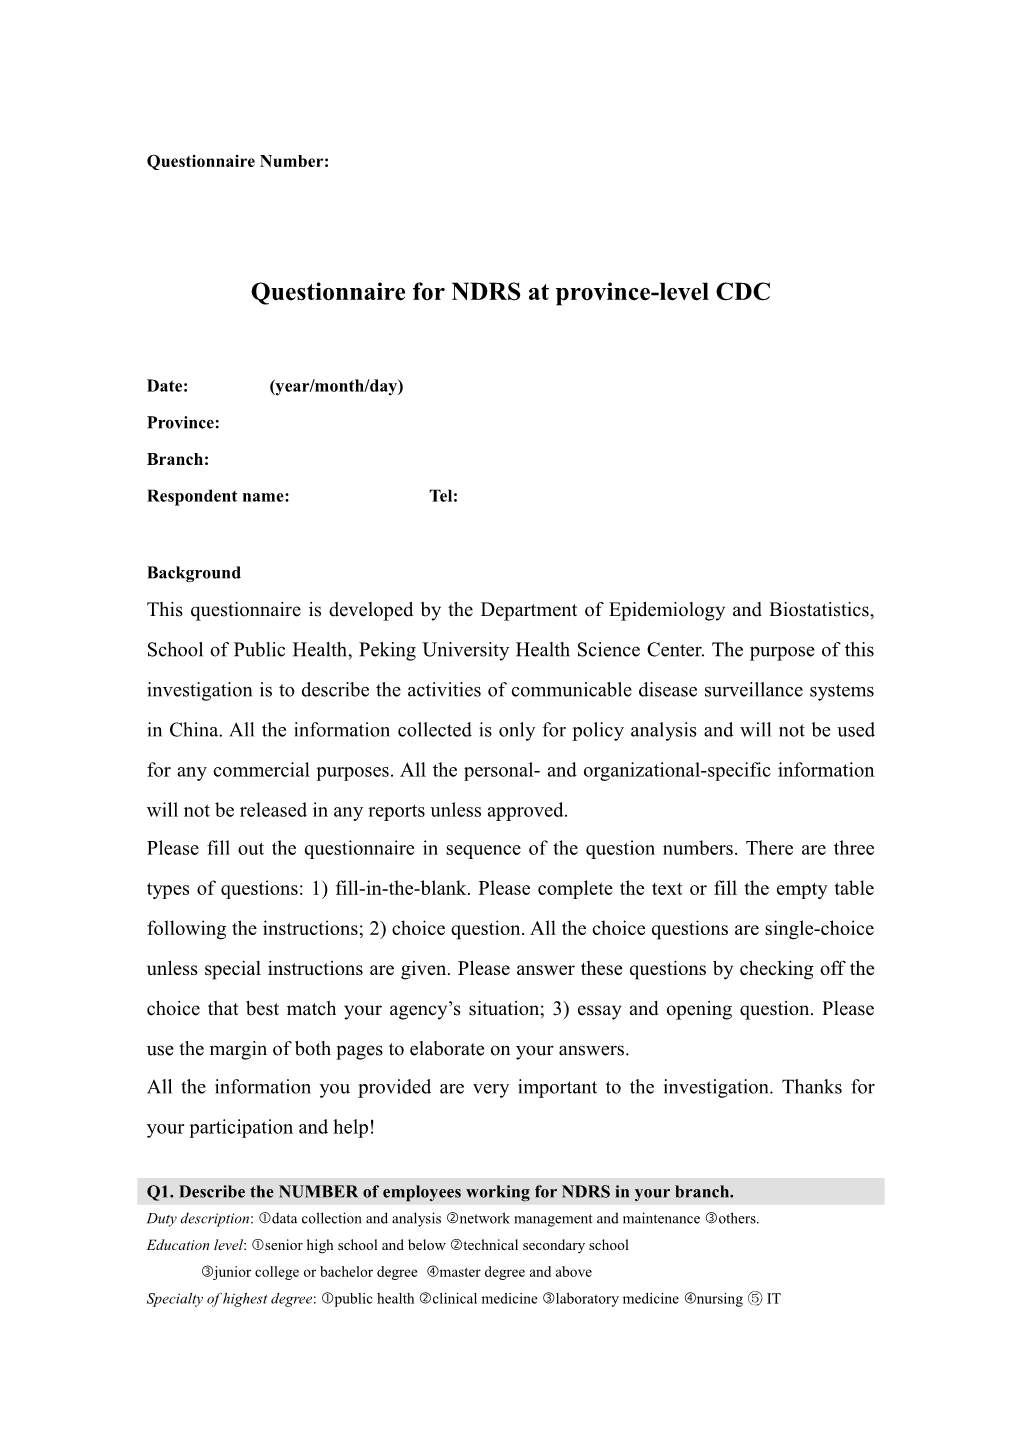 Questionnaire for Ndrsat Province-Level CDC